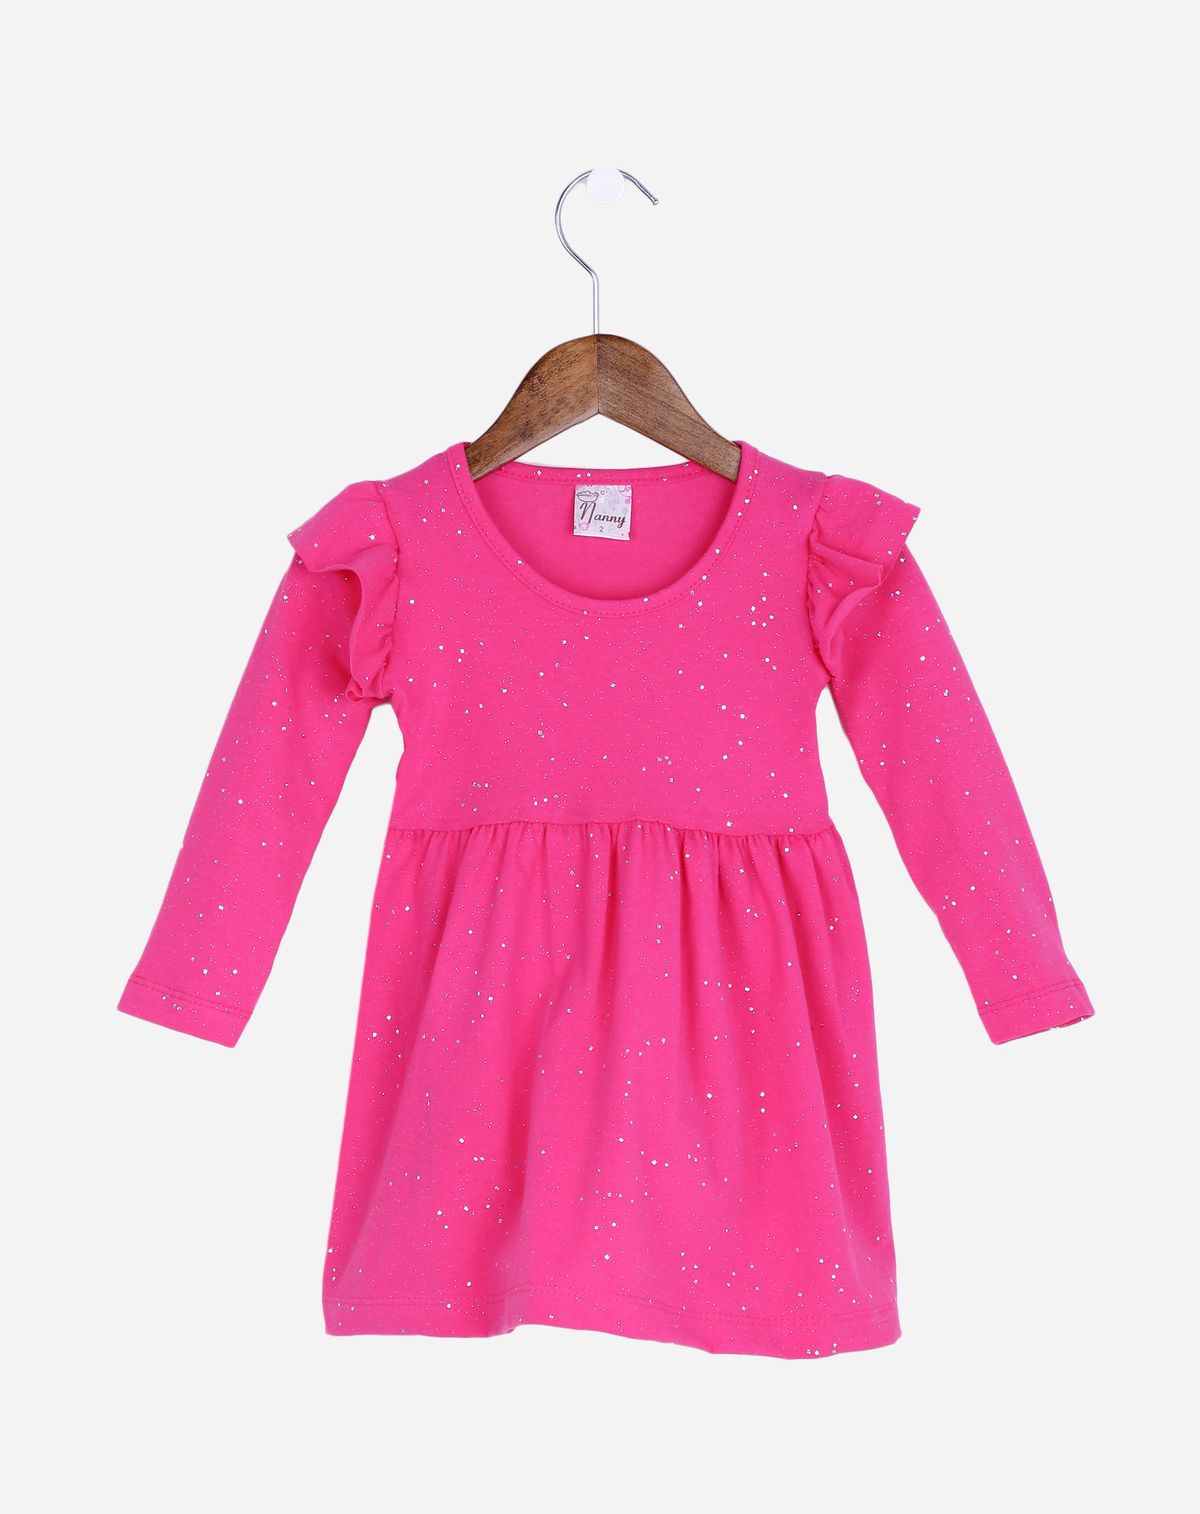 699127001-vestido-infantil-menina-alca-babados---tam.-1-a-3-anos-pink-1-264